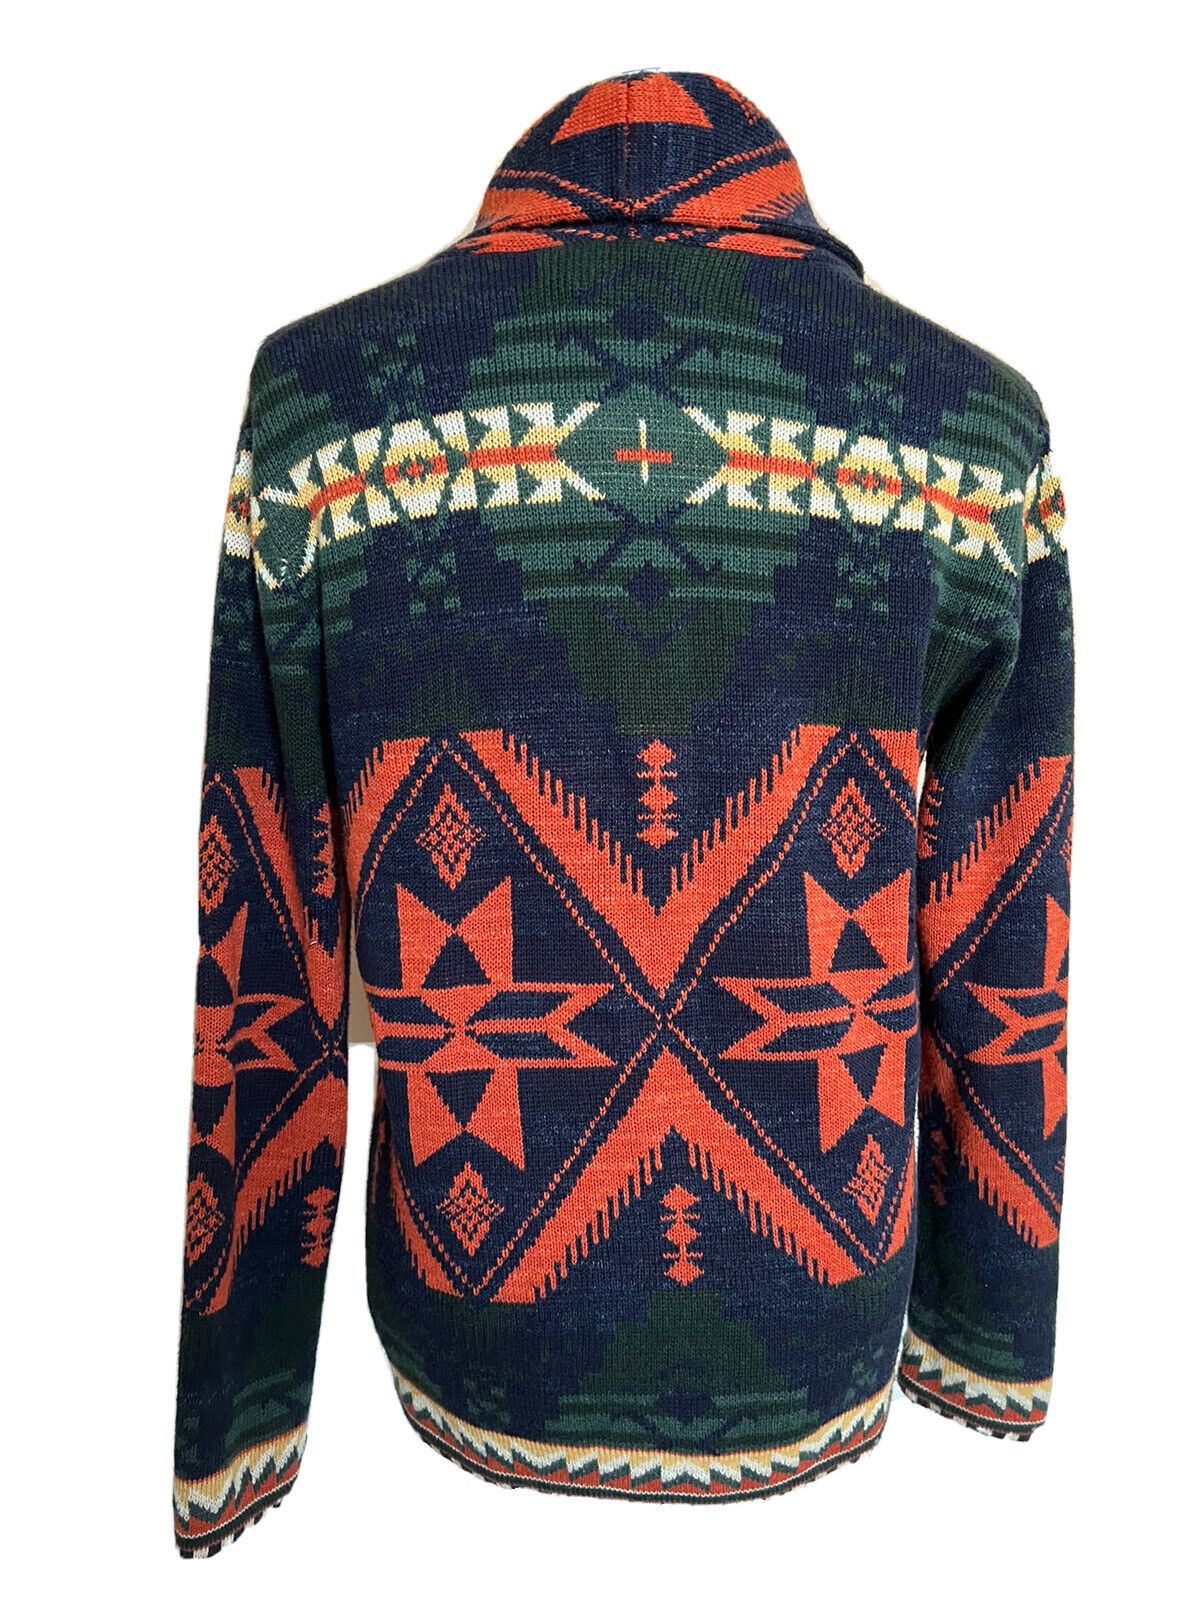 NWT $248 Polo Ralph Lauren Men's Cardigan Sweater Size S